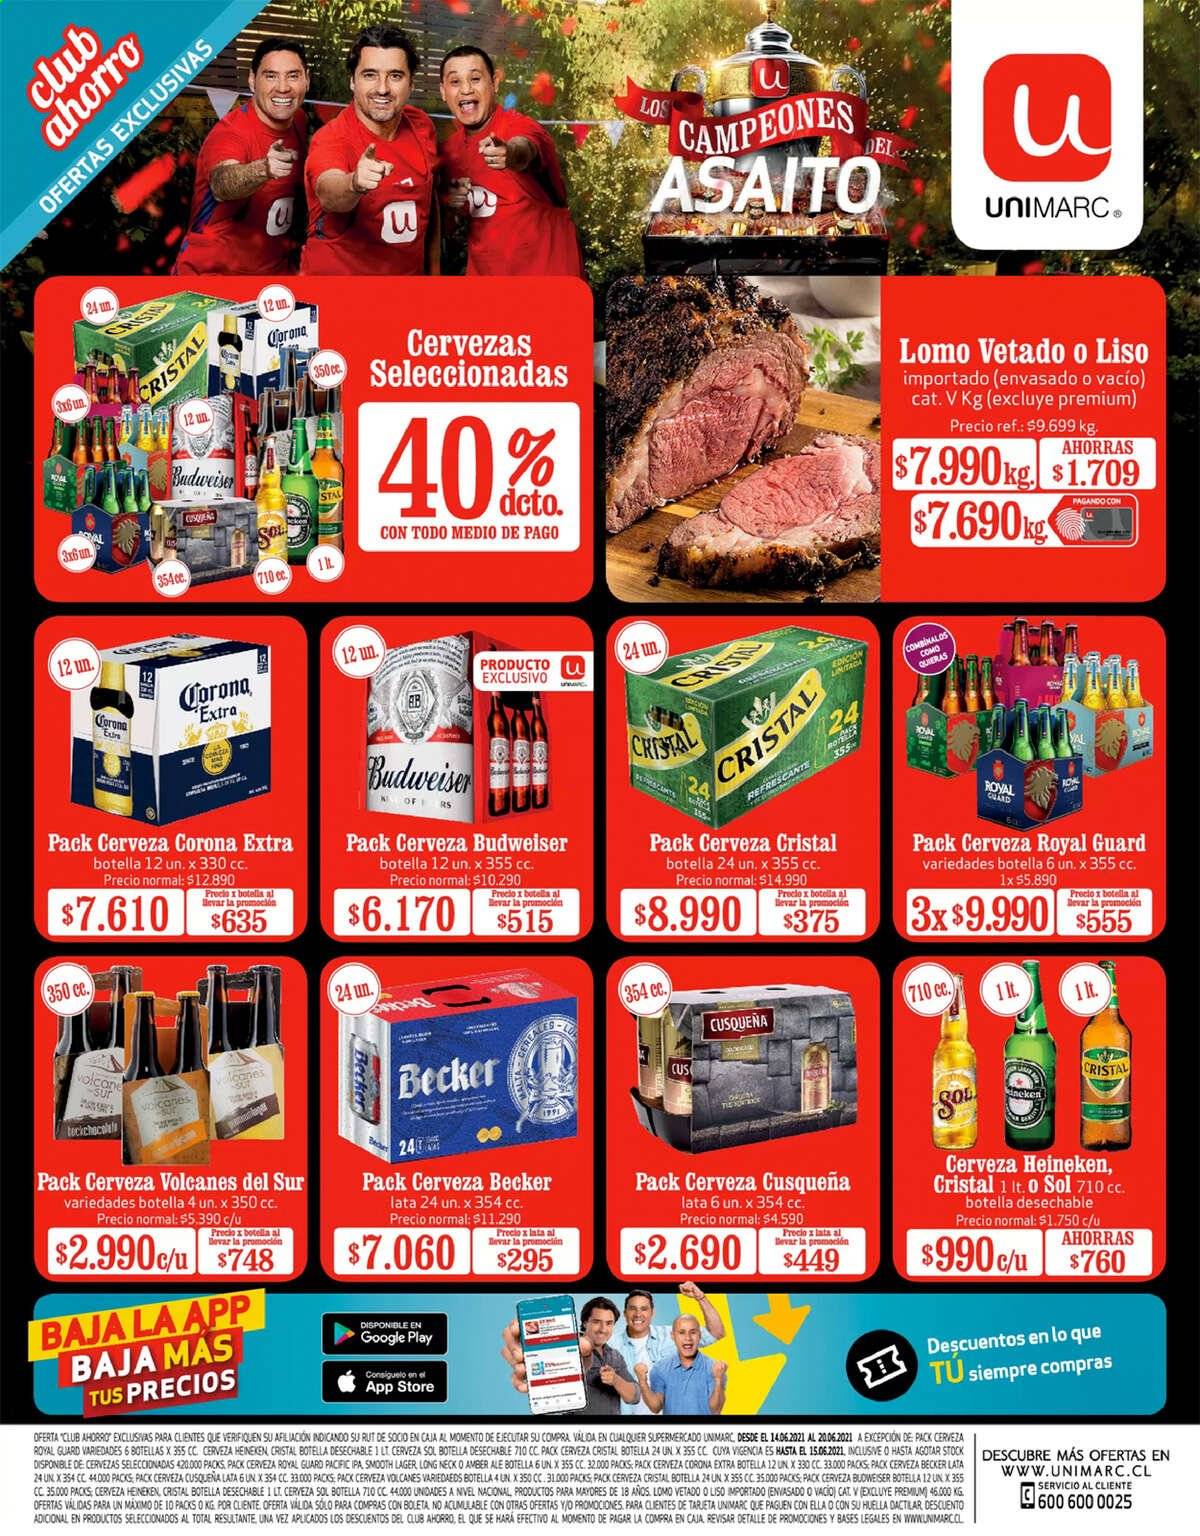 thumbnail - Catálogo Unimarc - 14.06.2021 - 20.06.2021 - Ventas - Budweiser, Heineken, Corona, cerveza Cristal, lomo. Página 1.